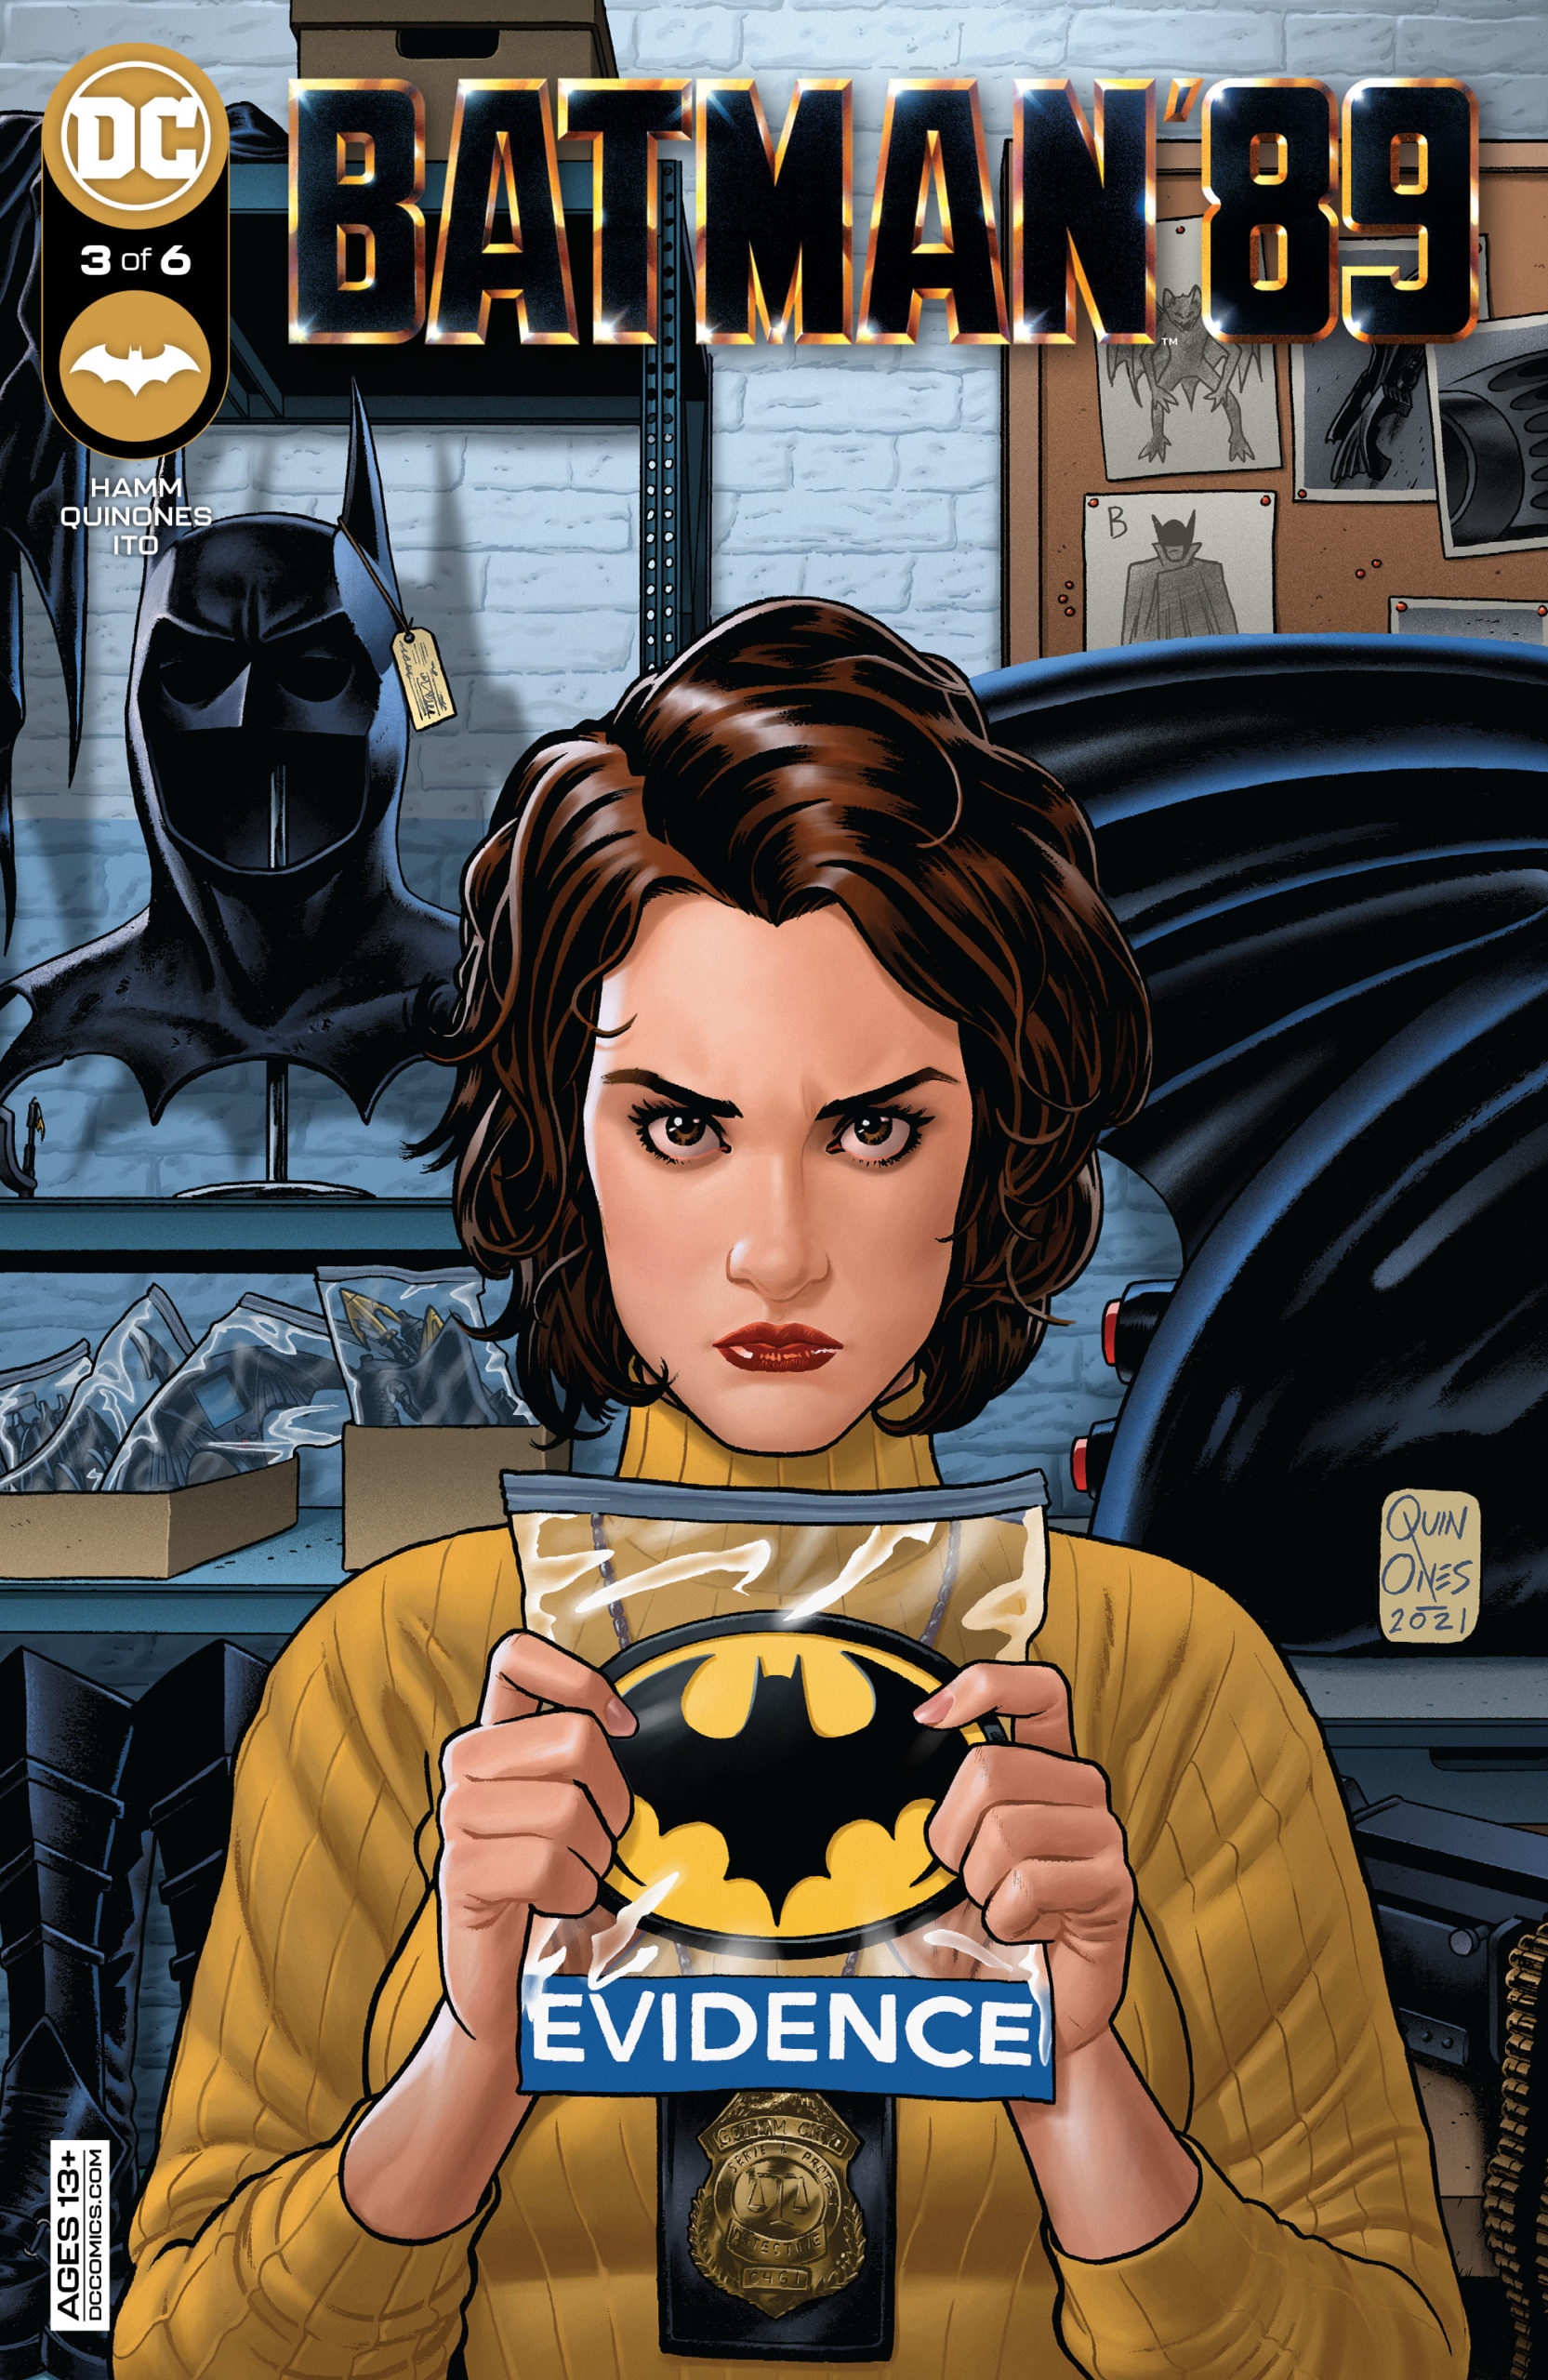 Review: Batman ’89 #3